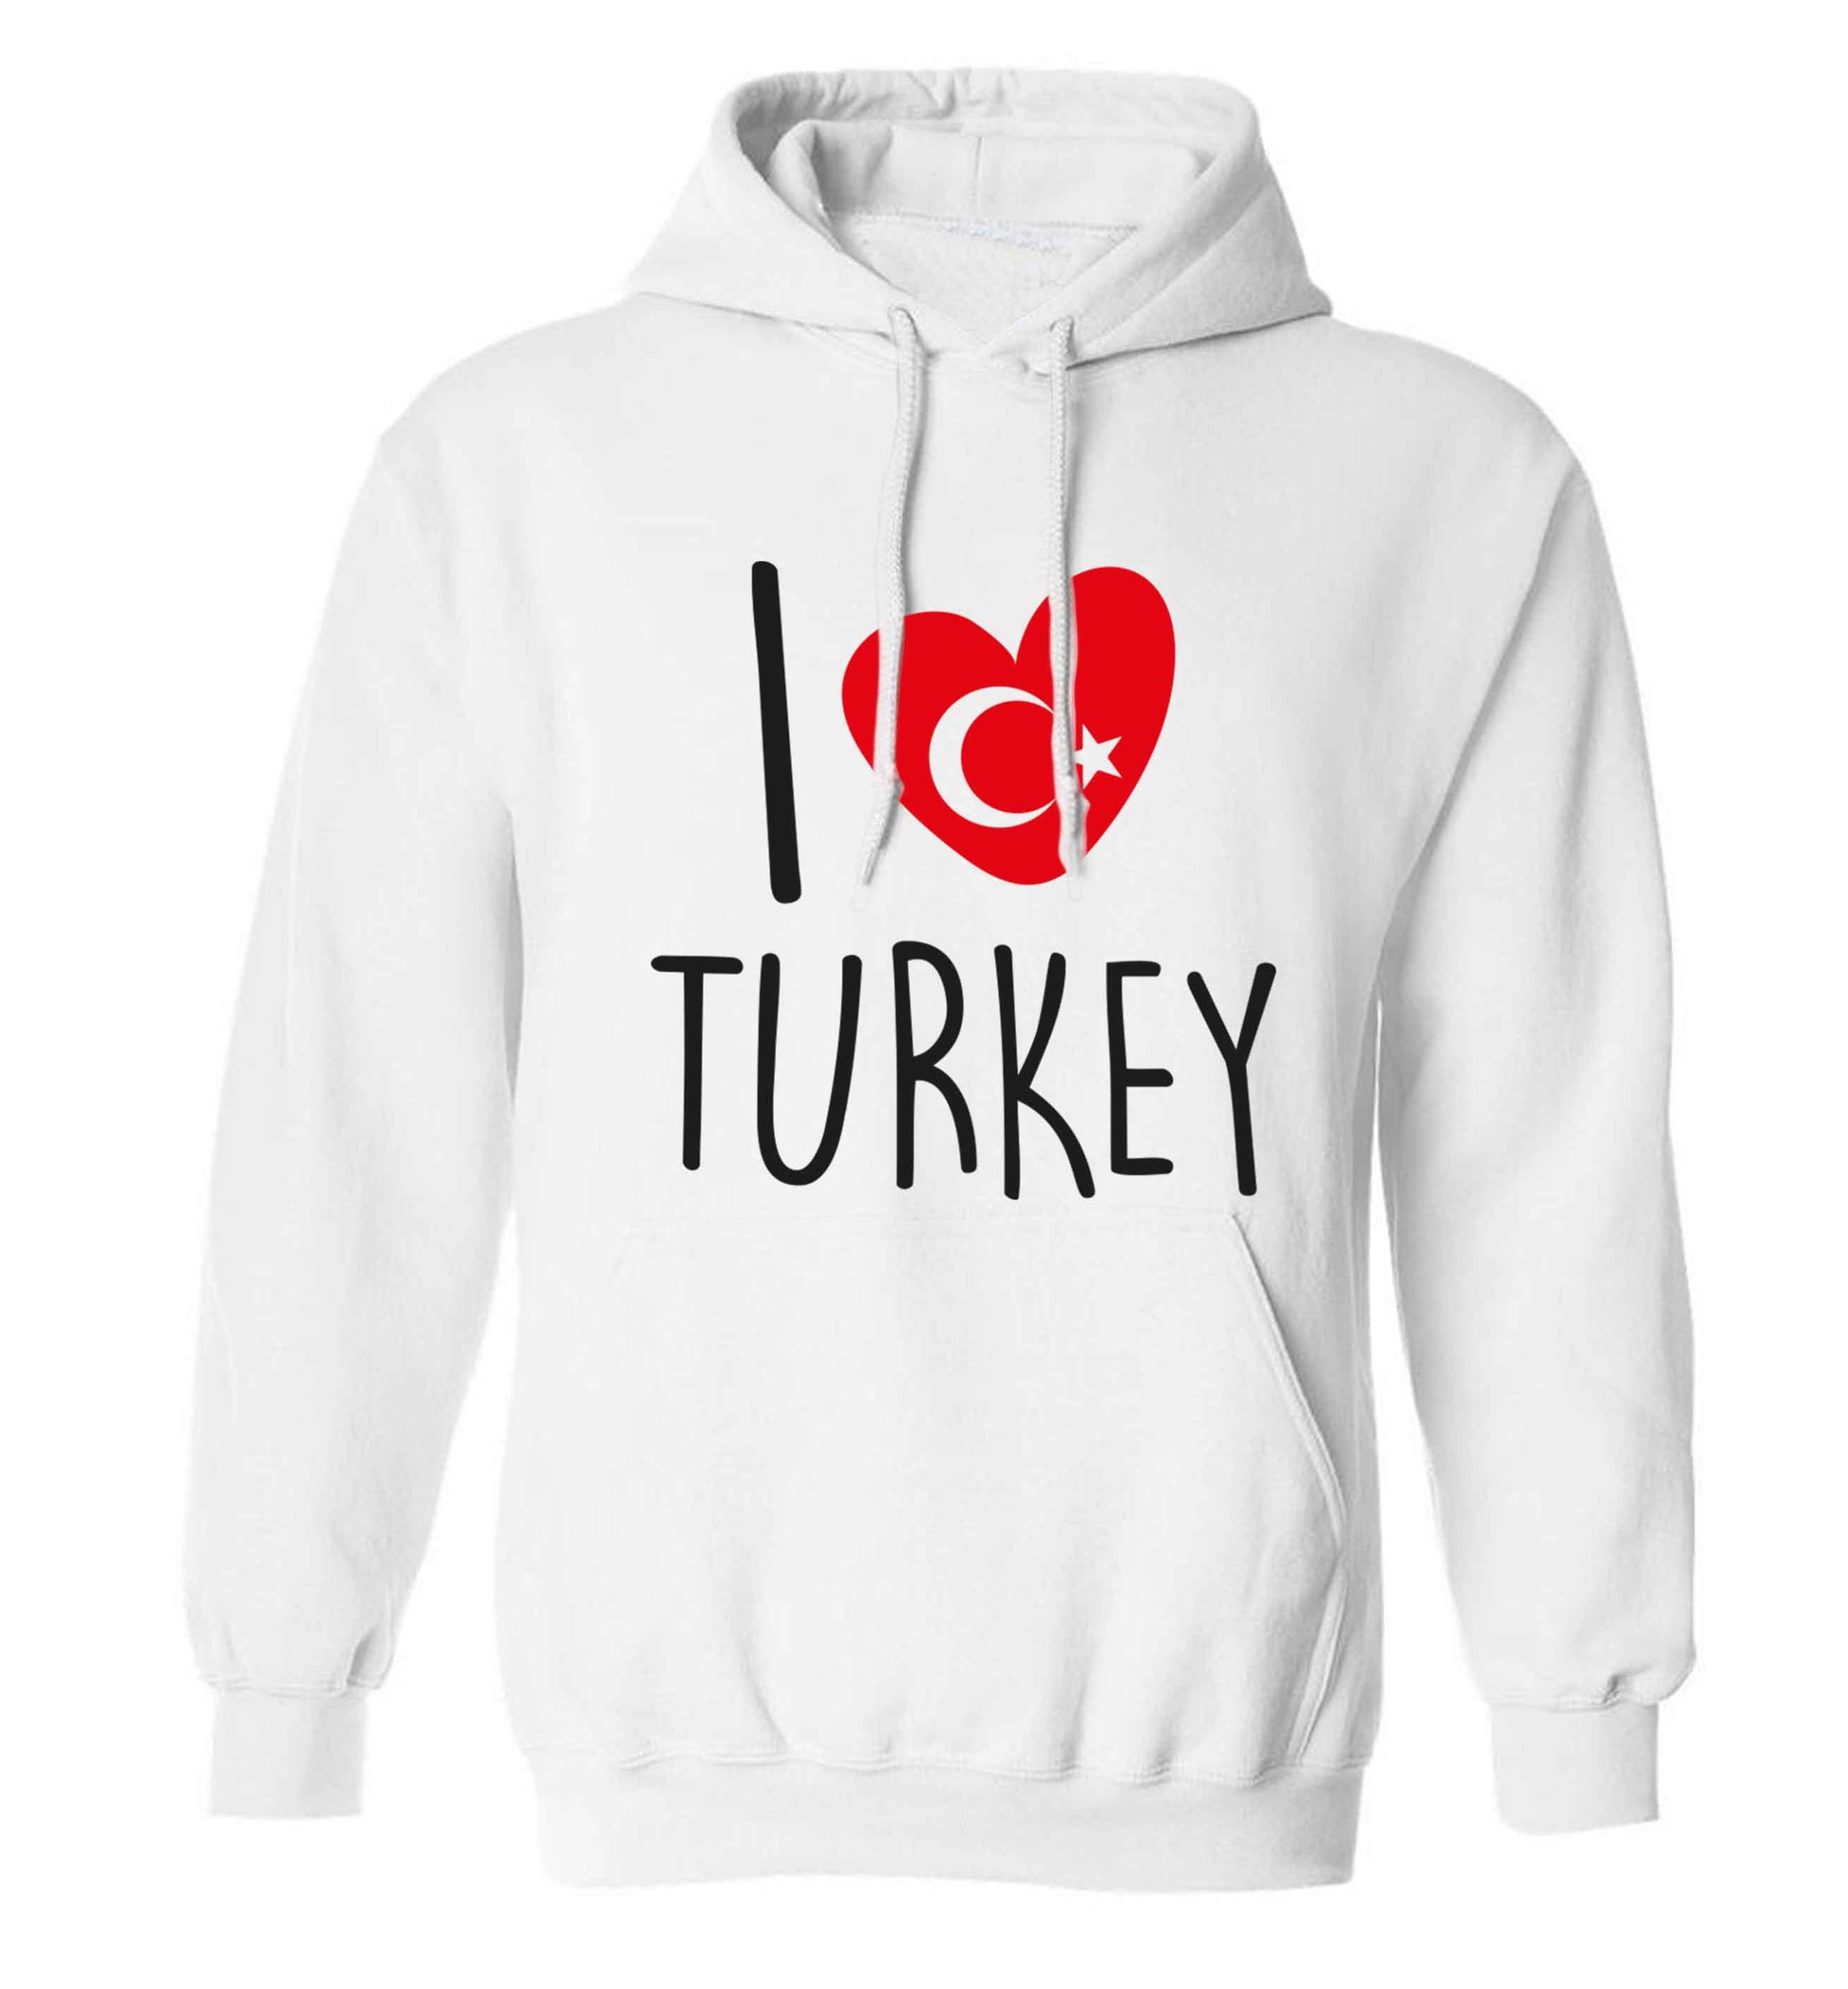 I love Turkey adults unisex white hoodie 2XL